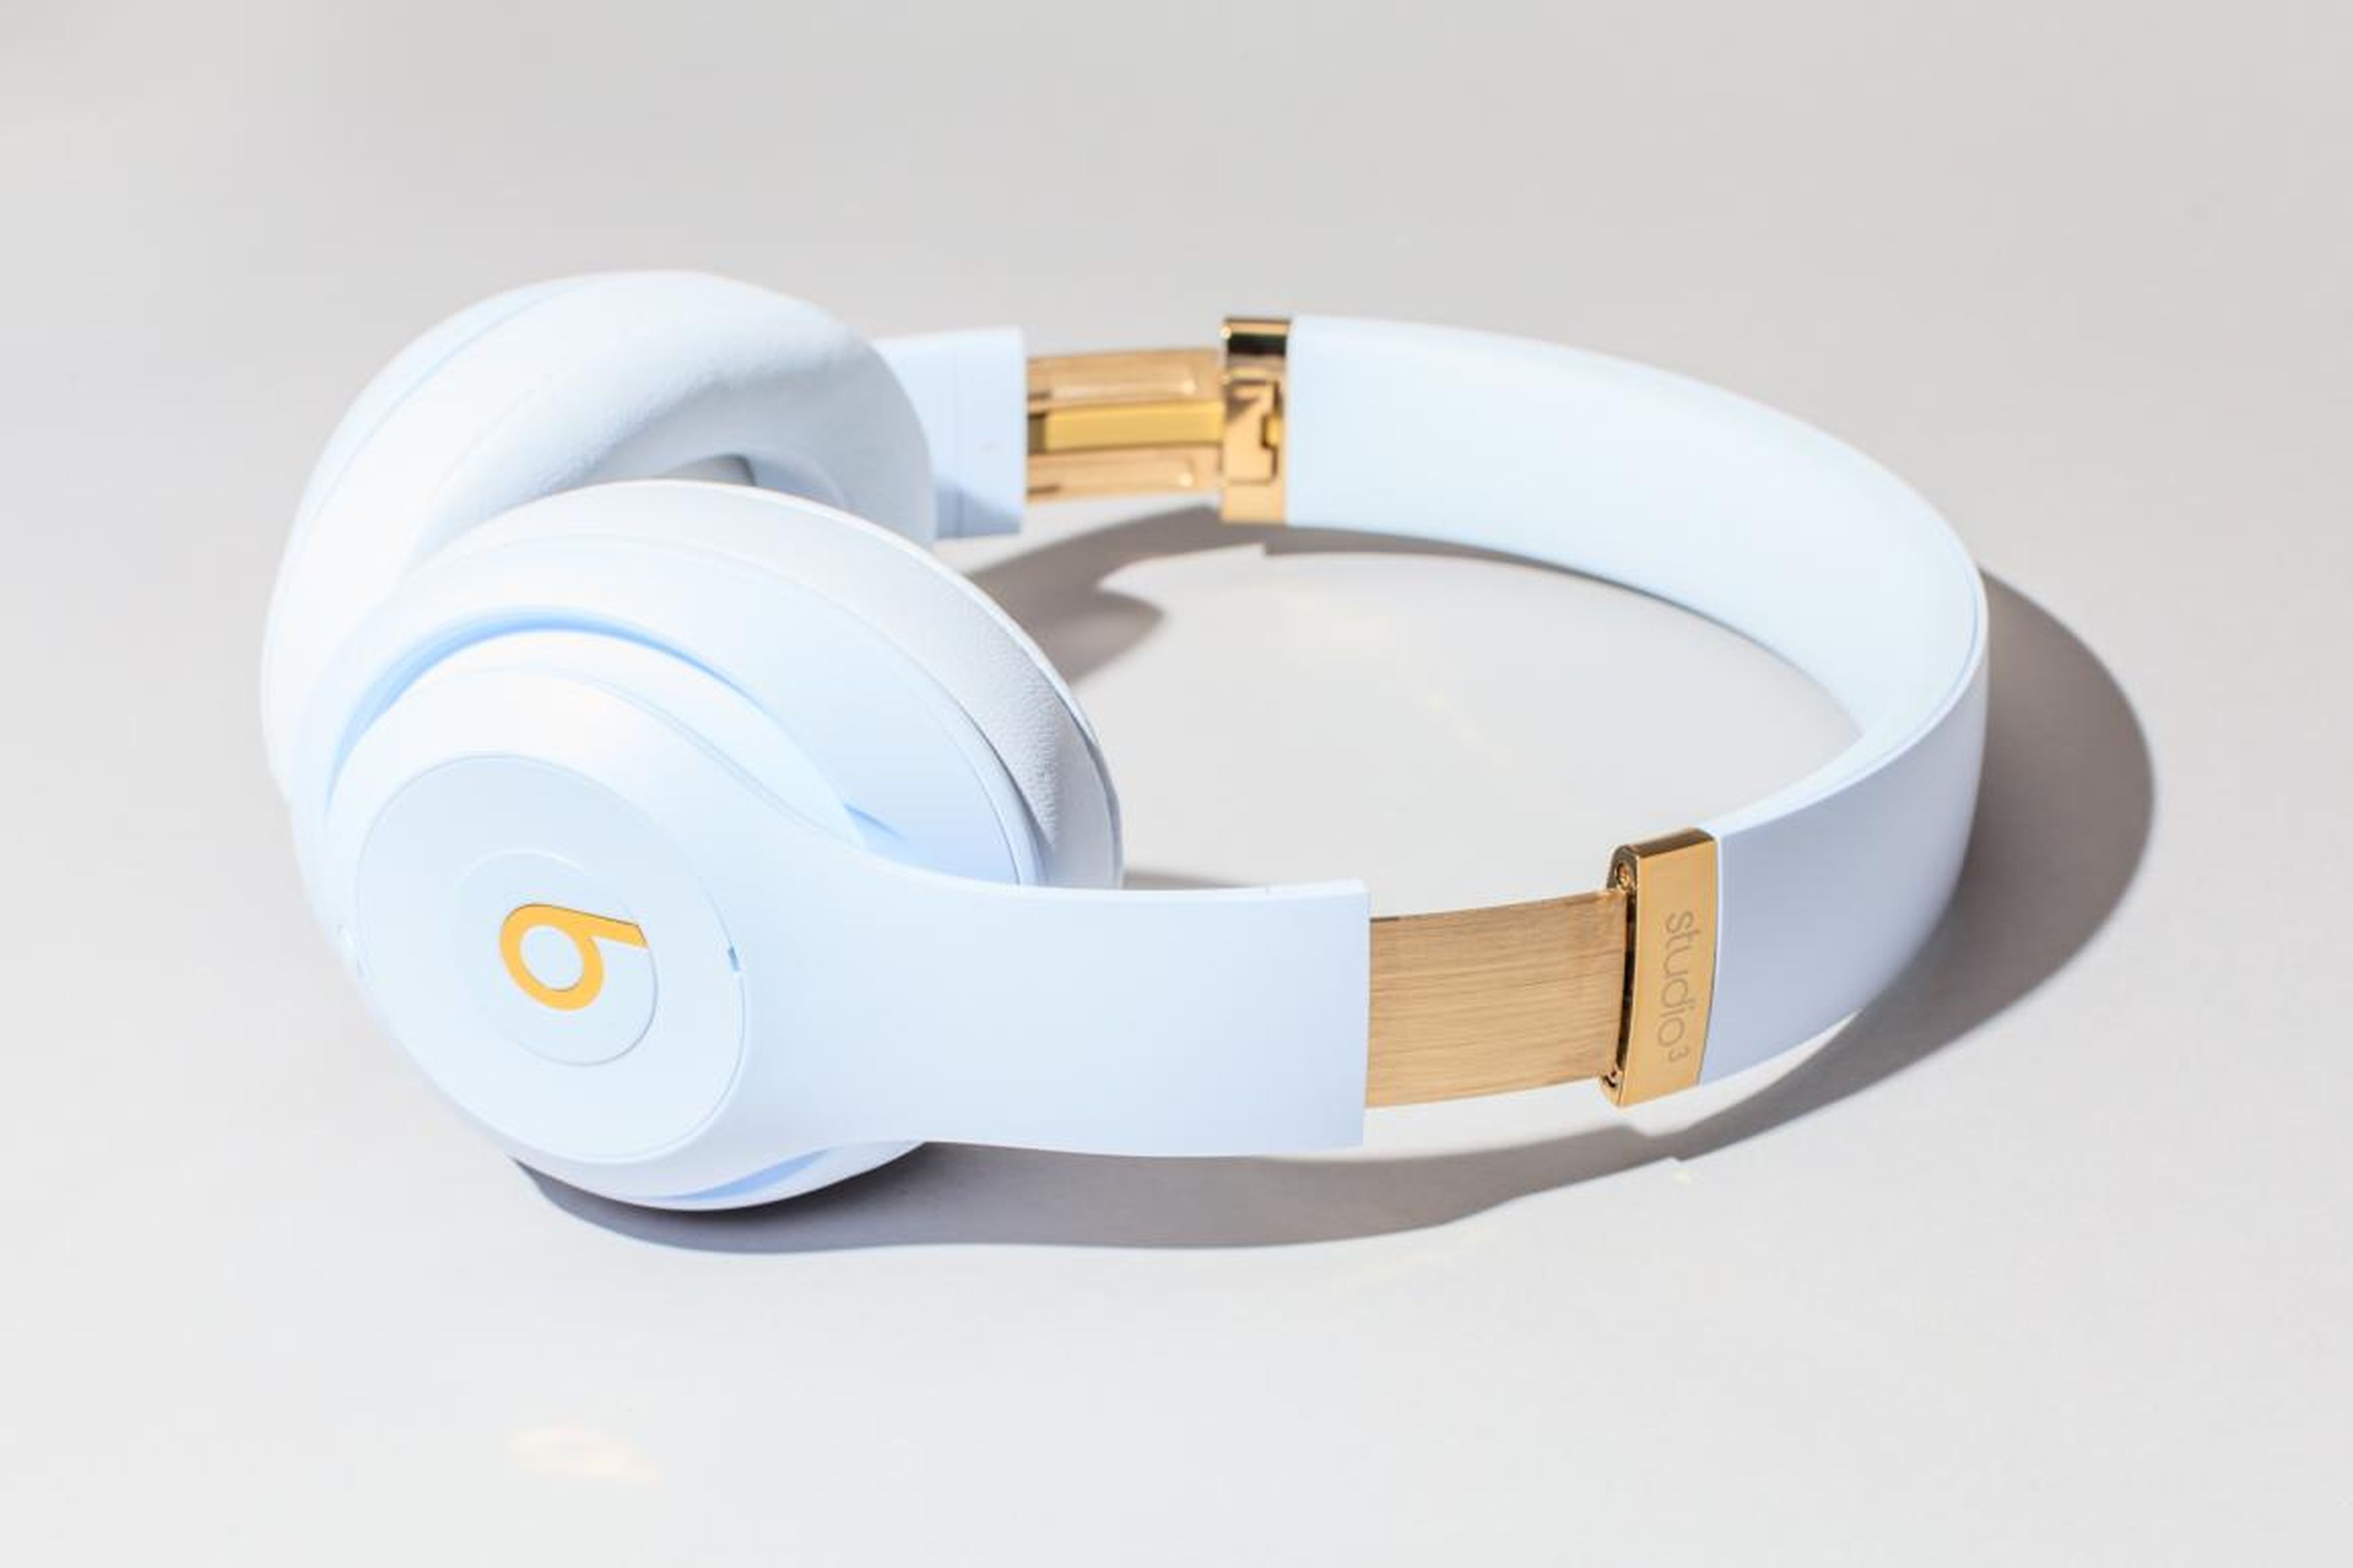 Beats Studio 3 wireless headphones retail for about $350.